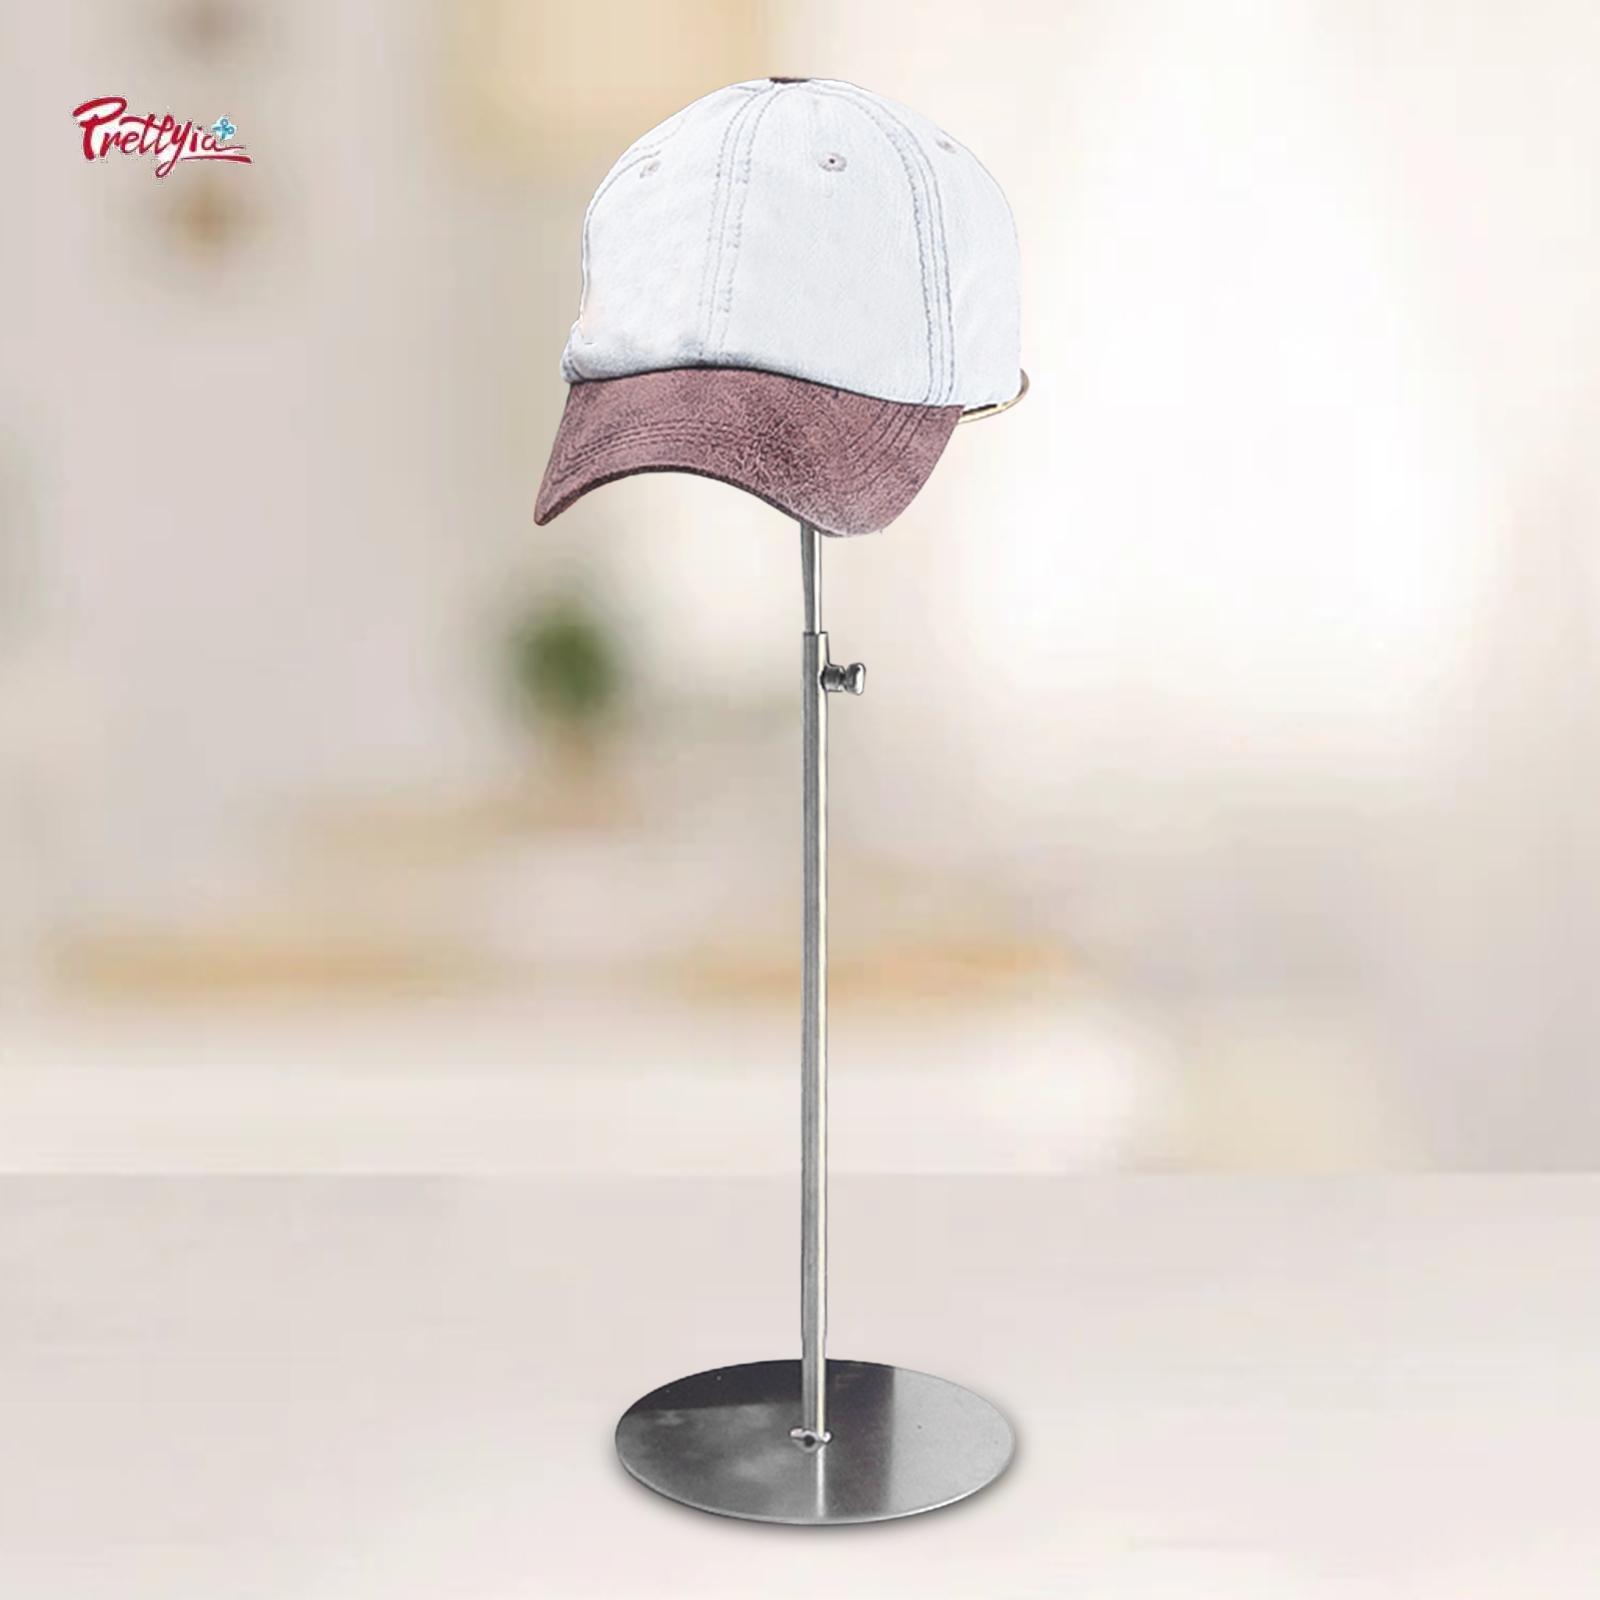 Prettyia Adjustable Height Hat Holder, Hat Stand